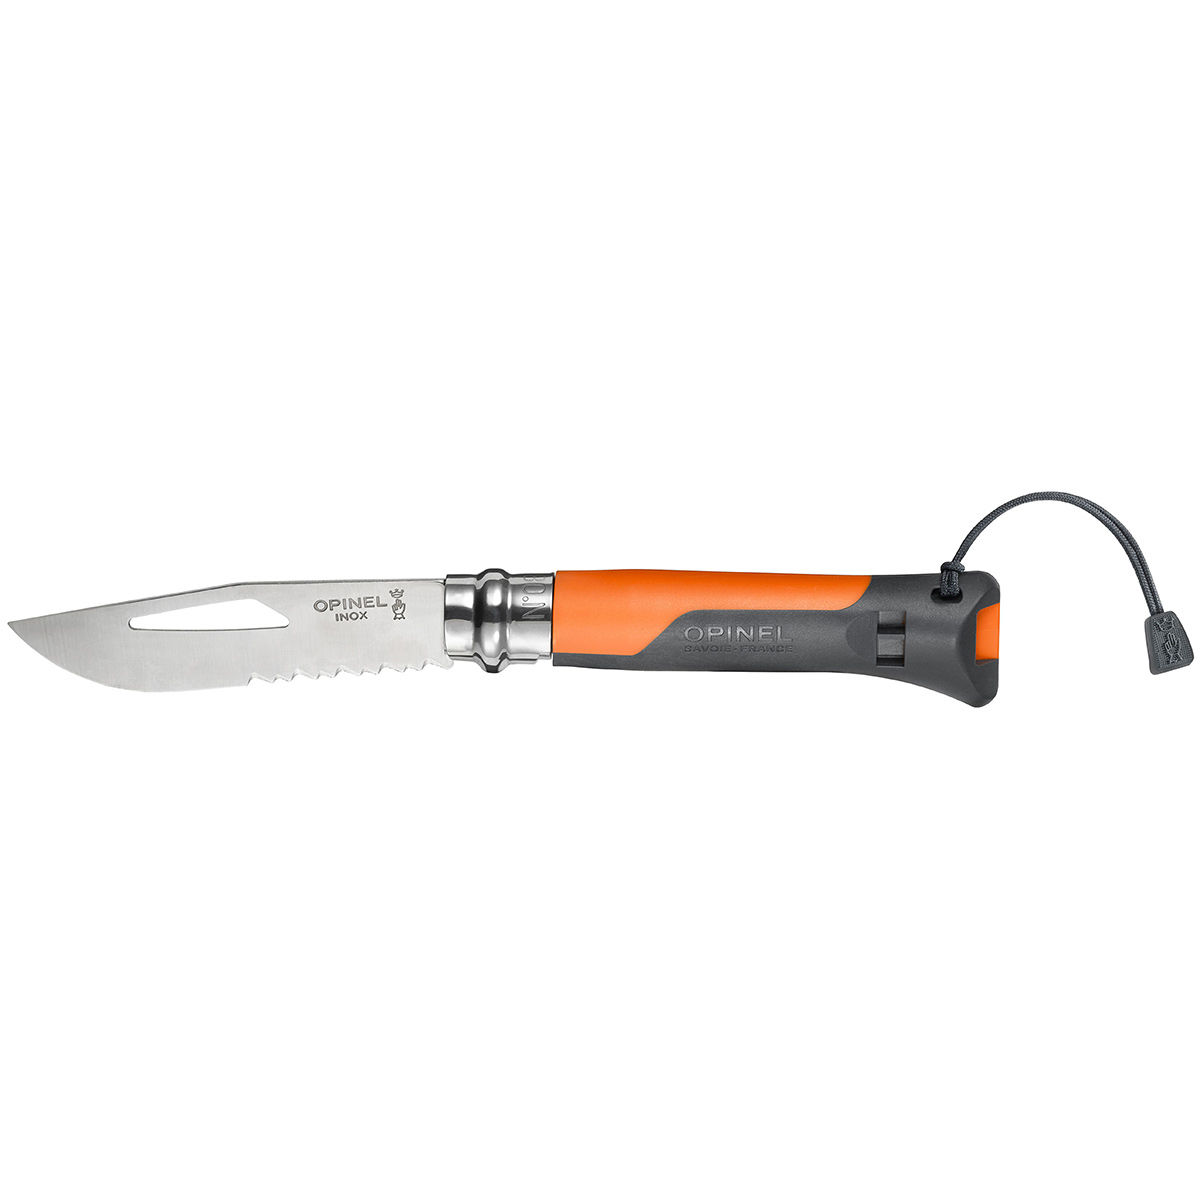 Couteau Opinel n°8 Outdoor - Mer et montagne 8,5 cm - Orange